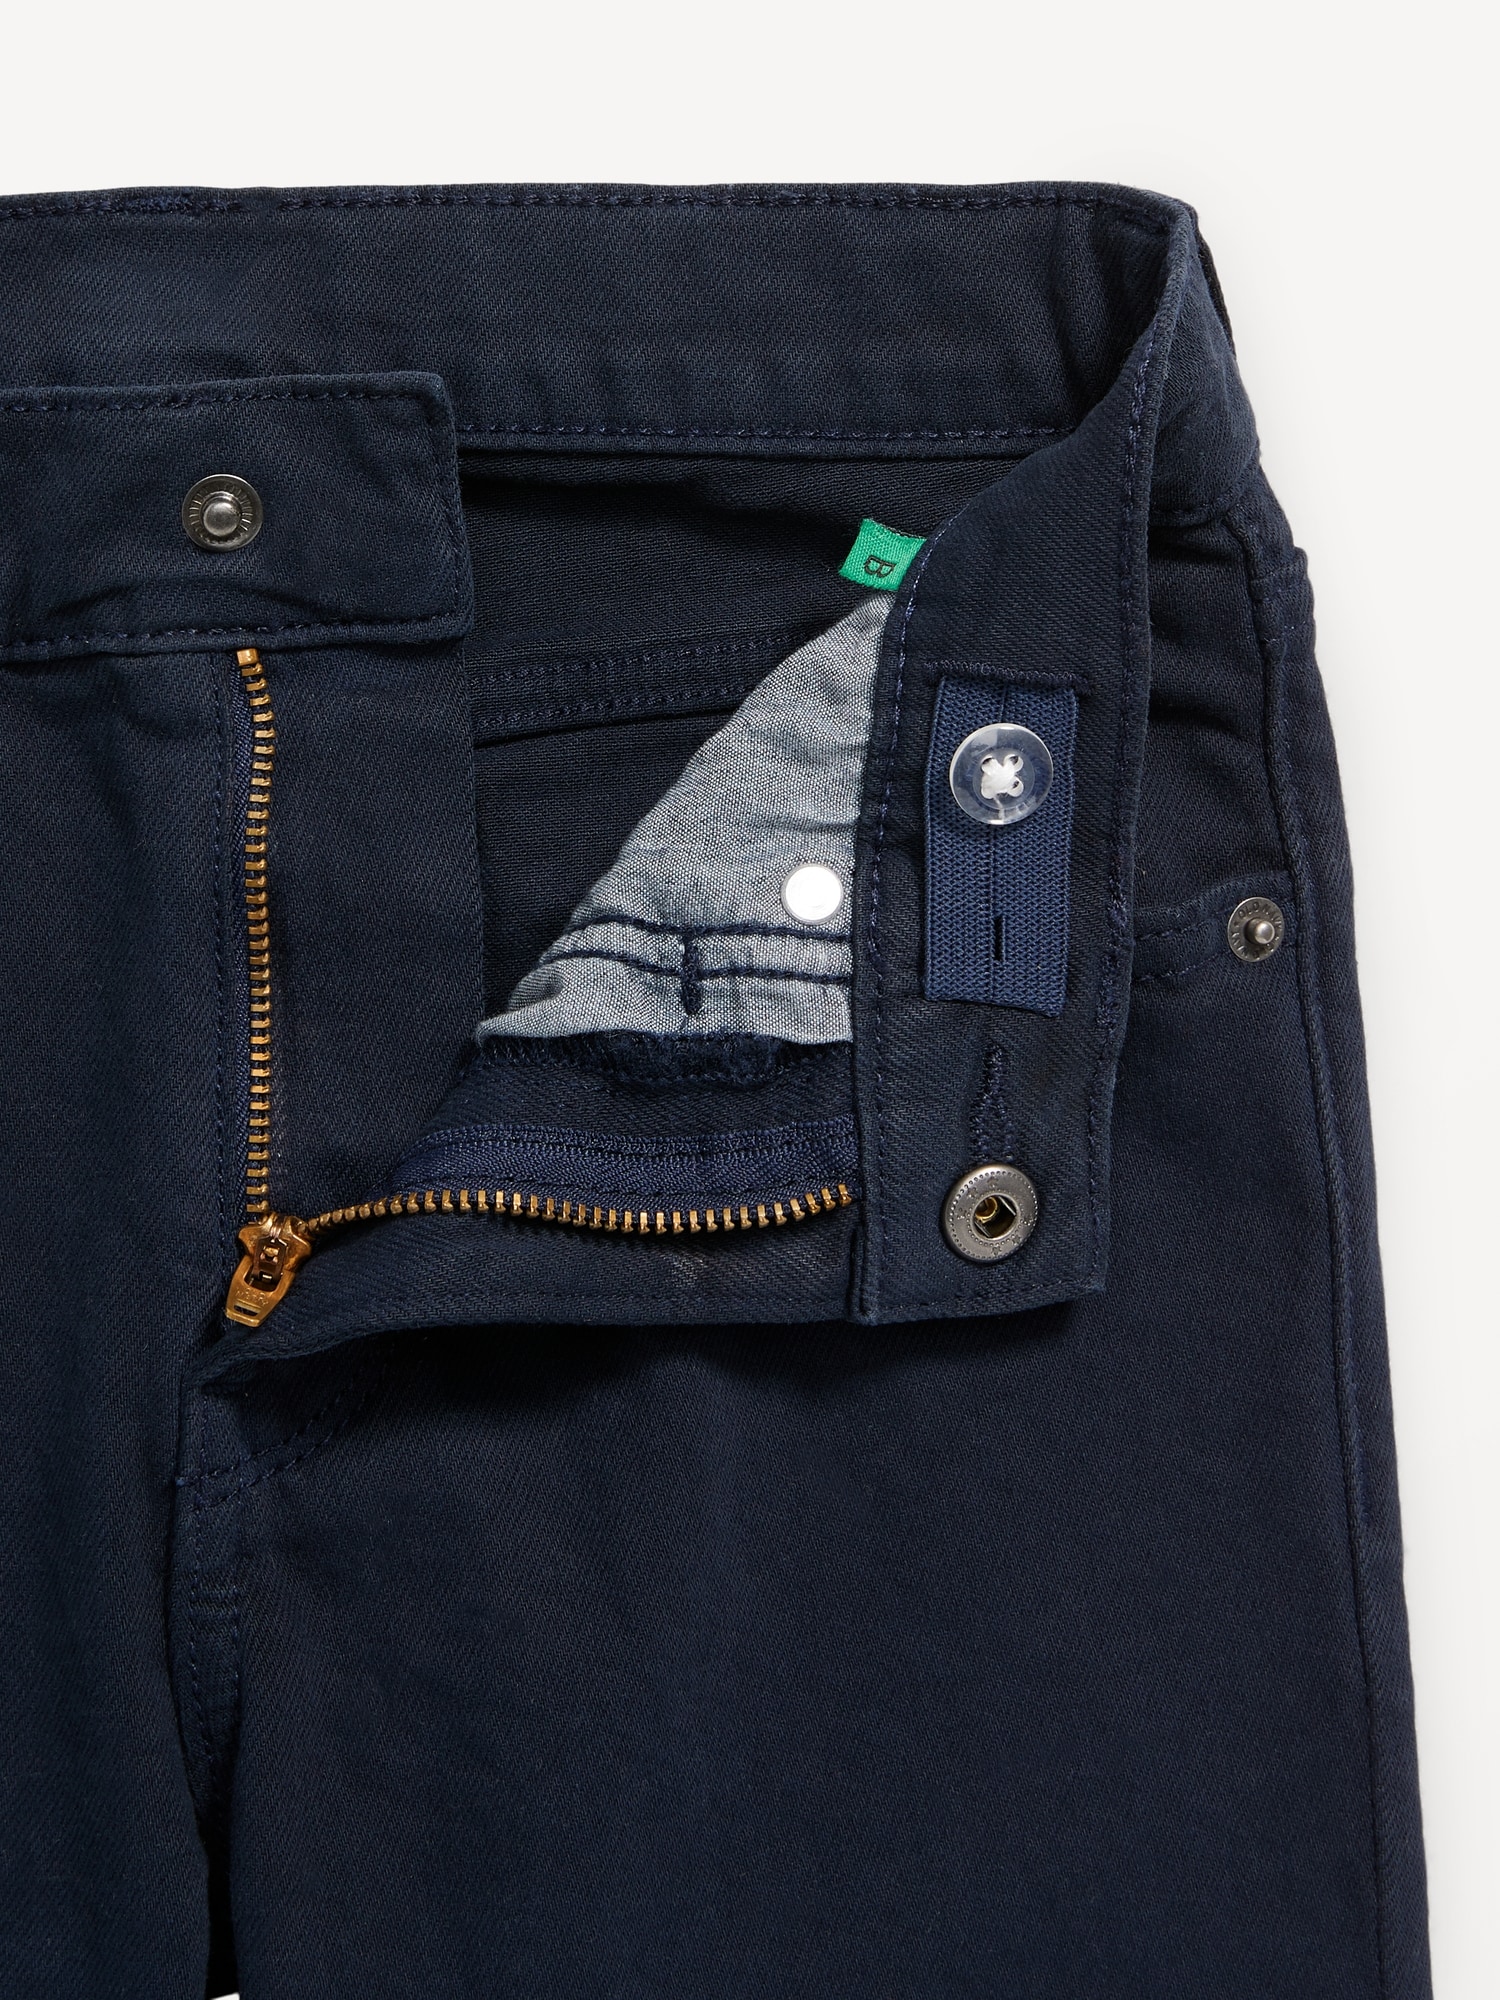 Five-Pocket for | Jeans Navy Slim Stretch Boys Old 360°